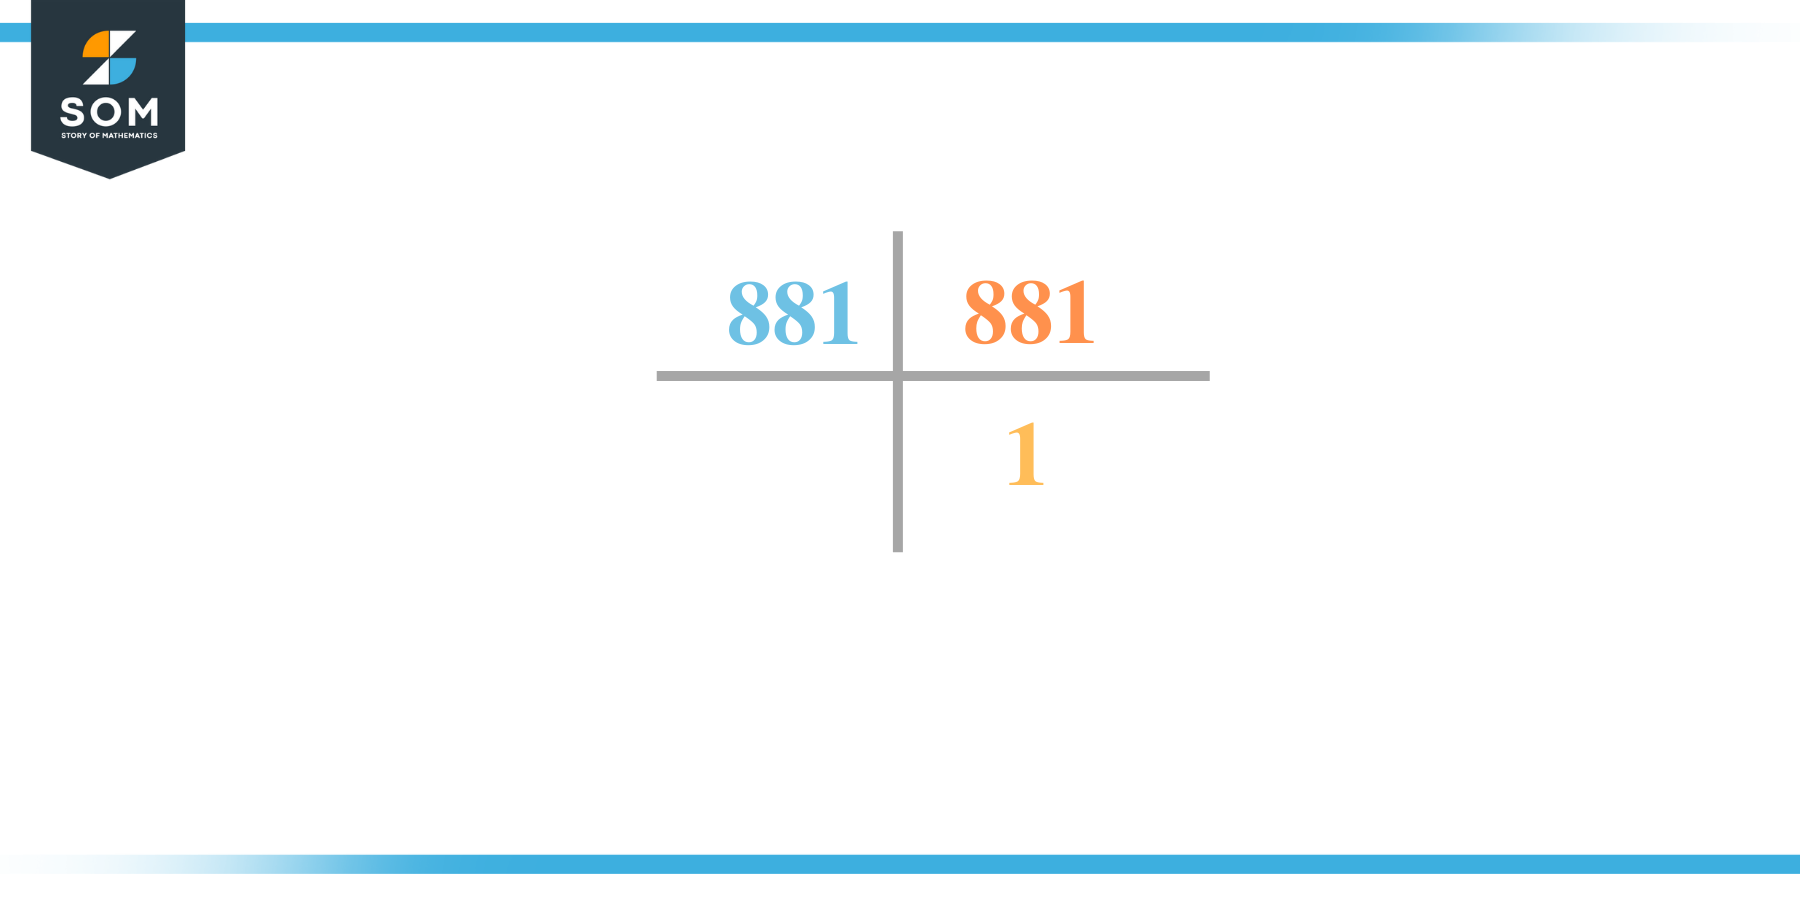 Prime factorization of 881